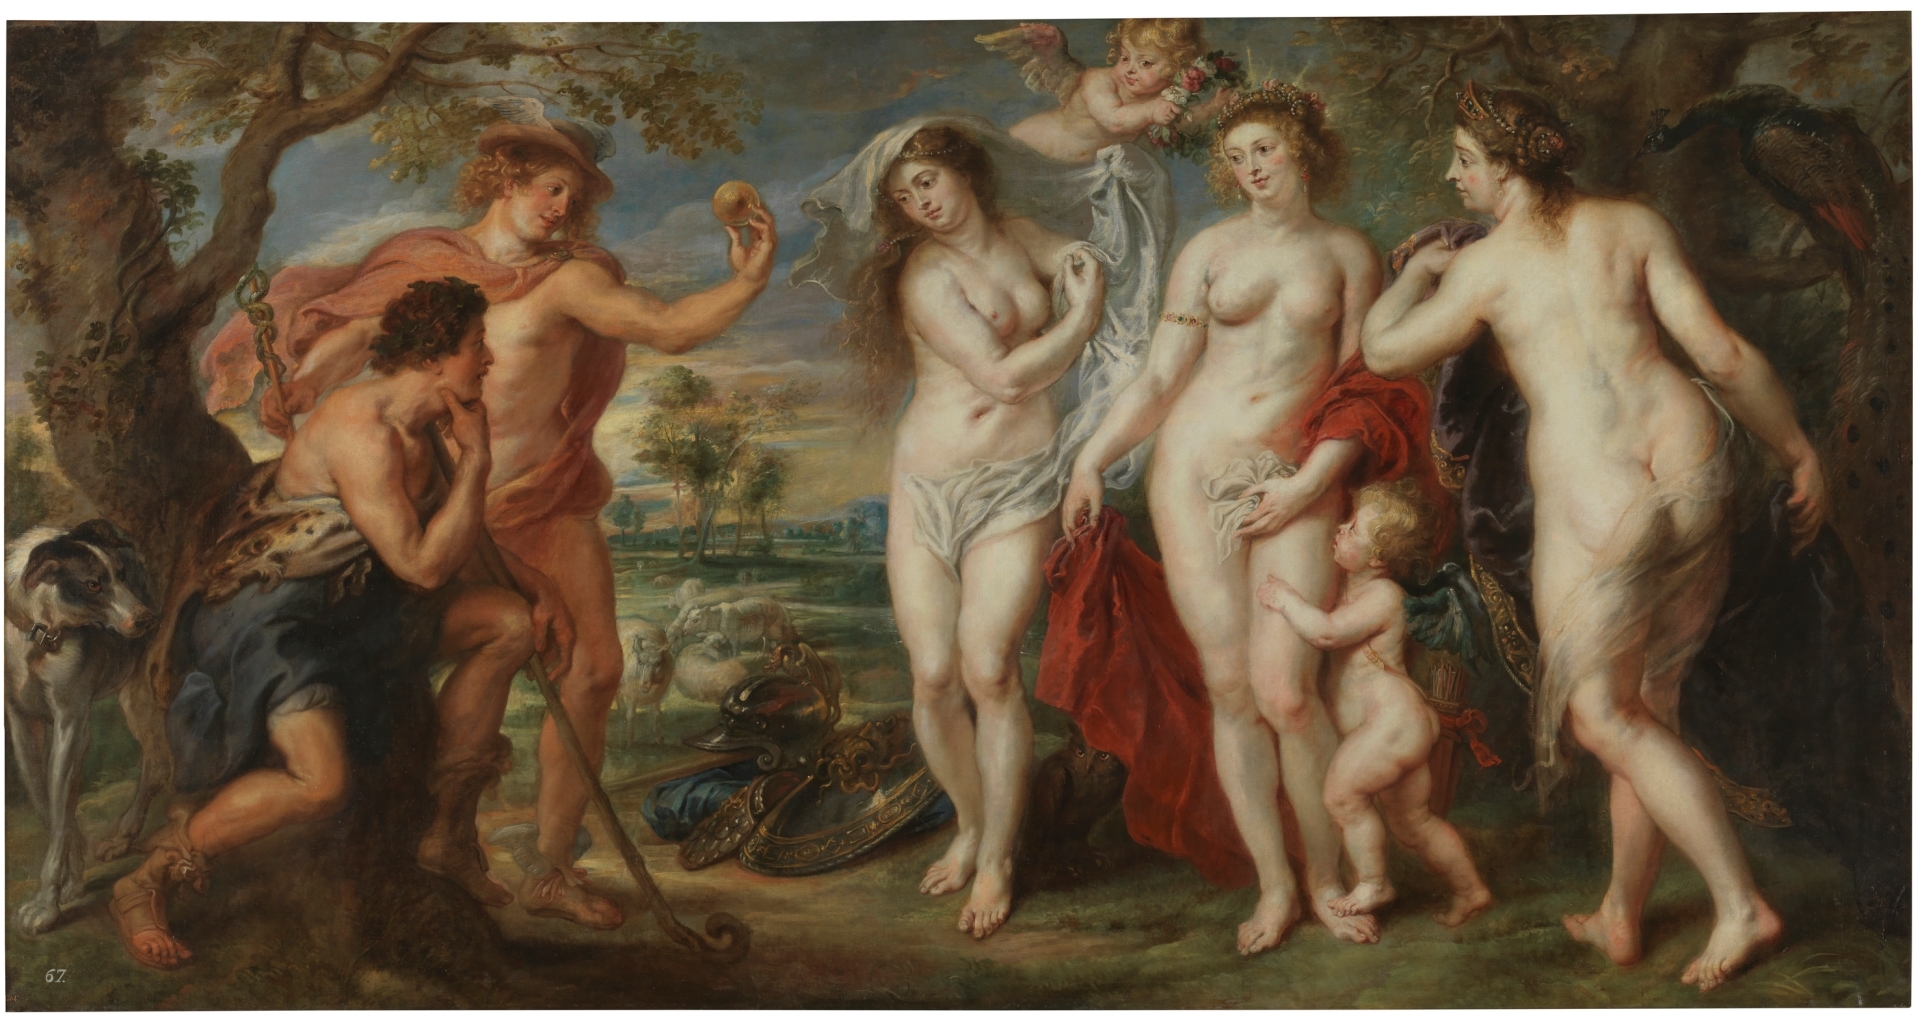 The Judgment of Paris by Peter Paul Rubens - c. 1639 - 199 cm x 381 cm Museo del Prado